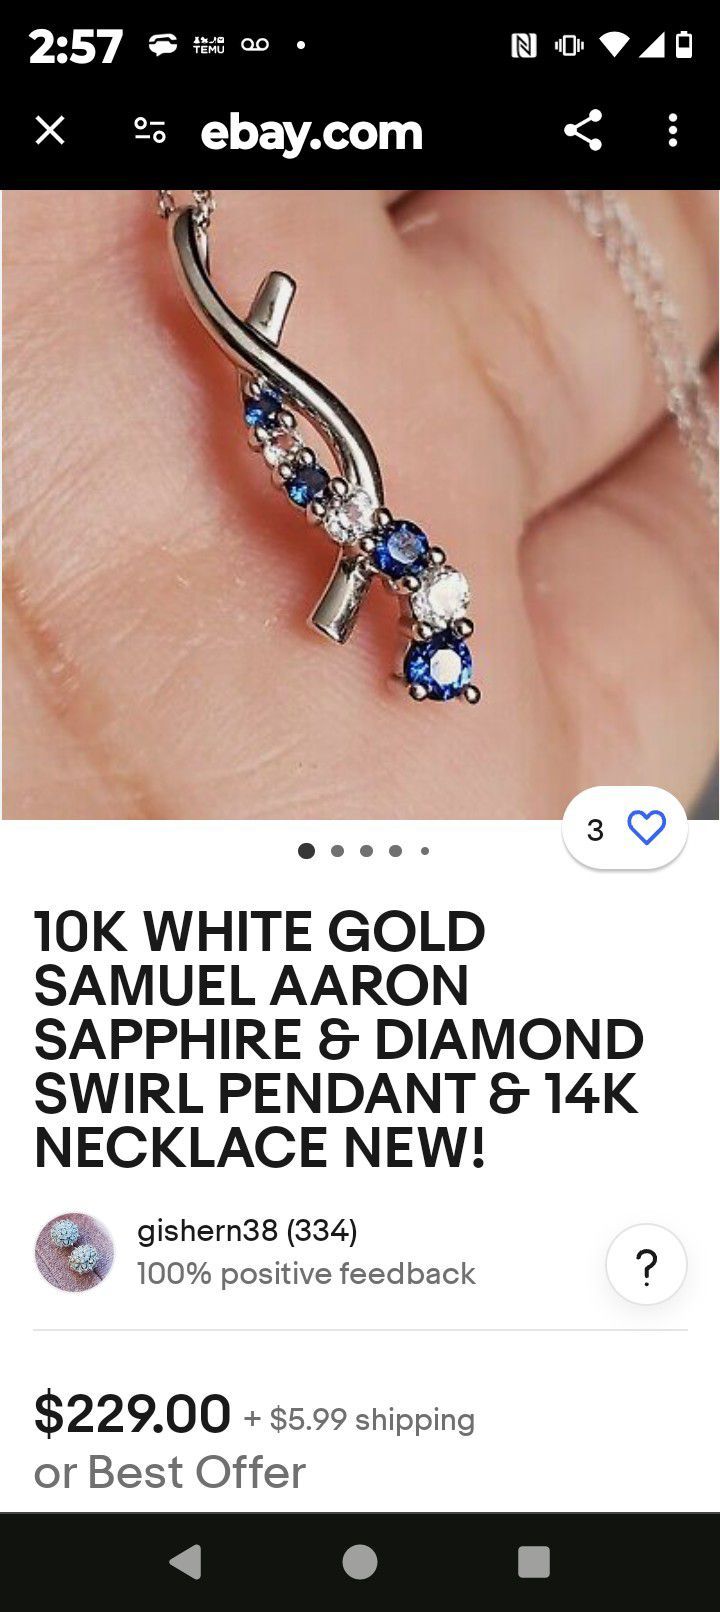 14K WHITE GOLD SAMUEL AARON SAPPHIRE & DIAMOND SWIRL PENDANT With NECKLACE!

